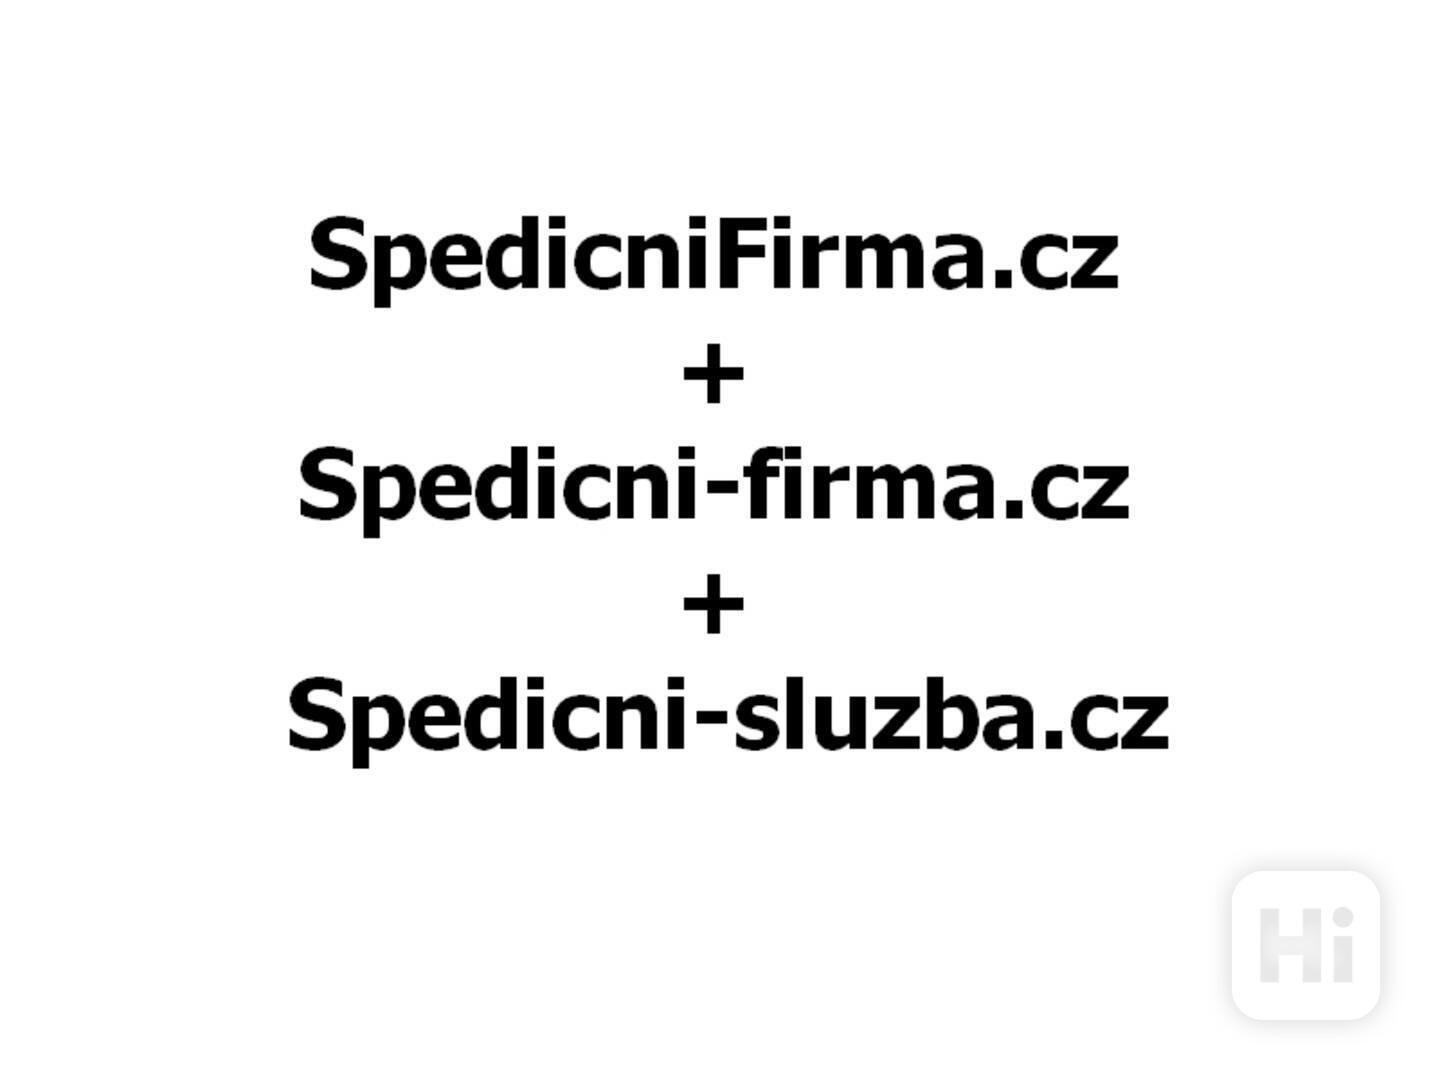 SpedicniFirma.cz + Spedicni-firma.cz + Spedicni-sluzba.cz - foto 1